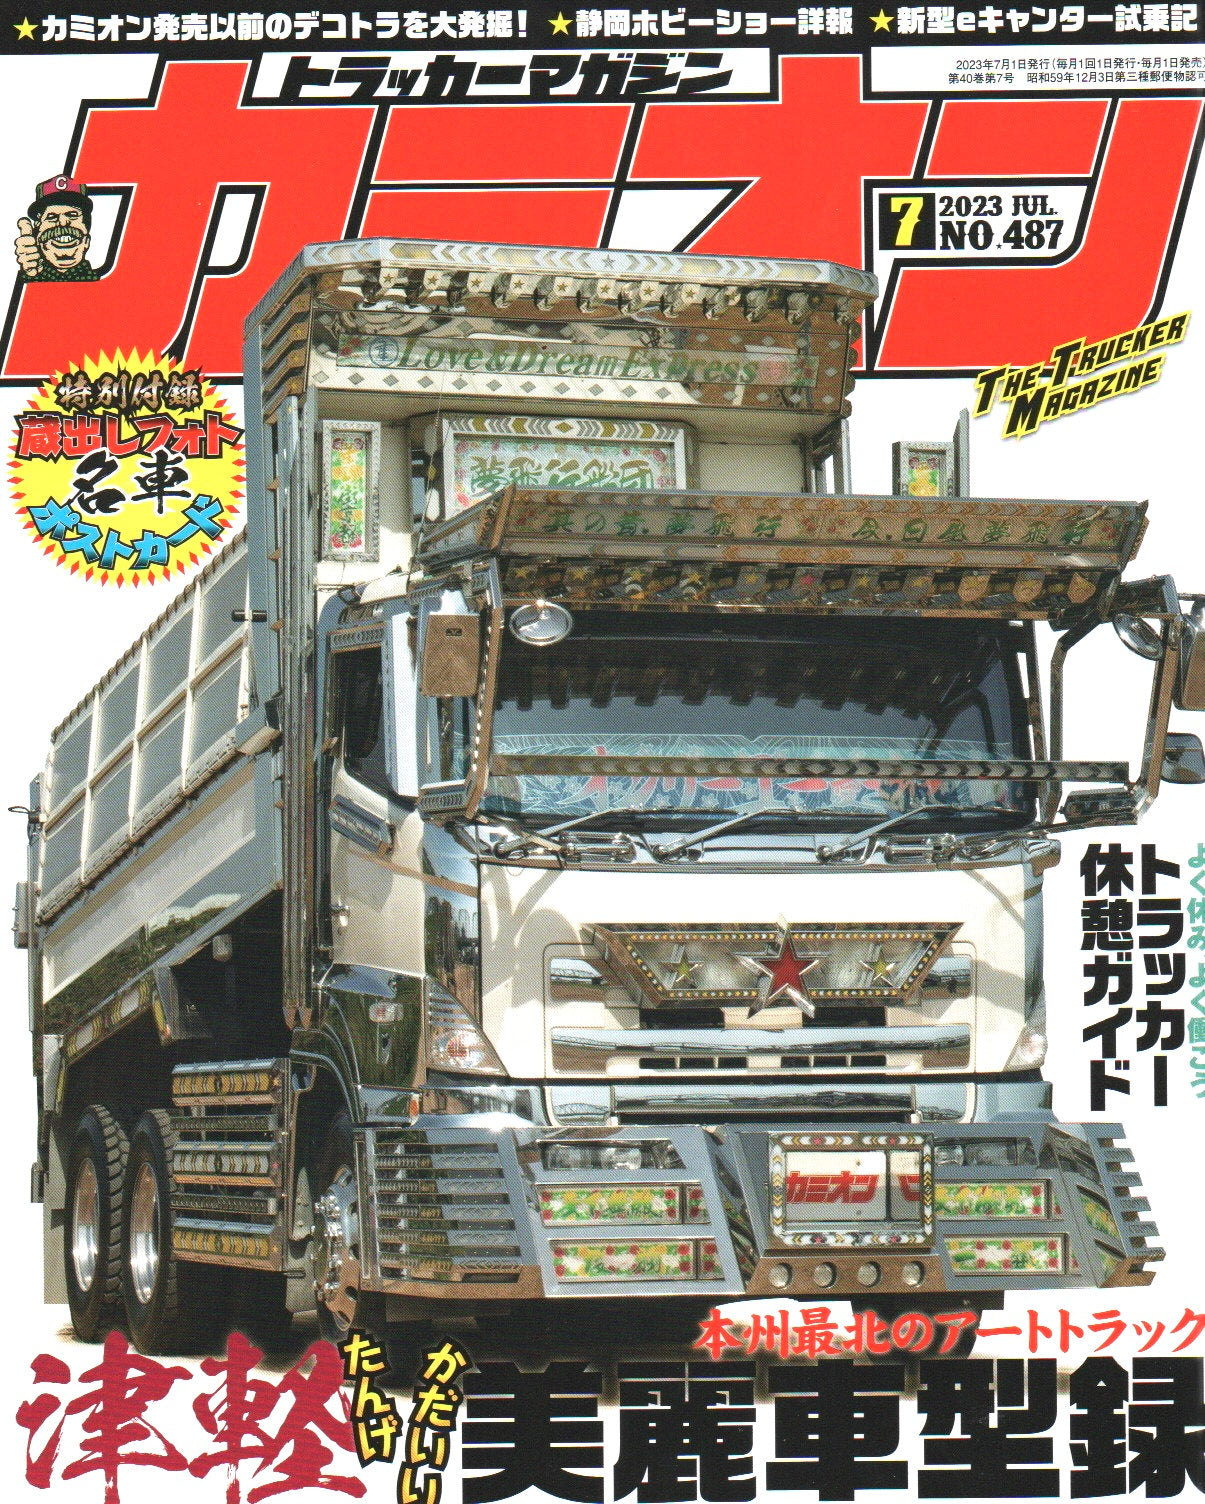 DEKOTORA Magazine (Dream Express)